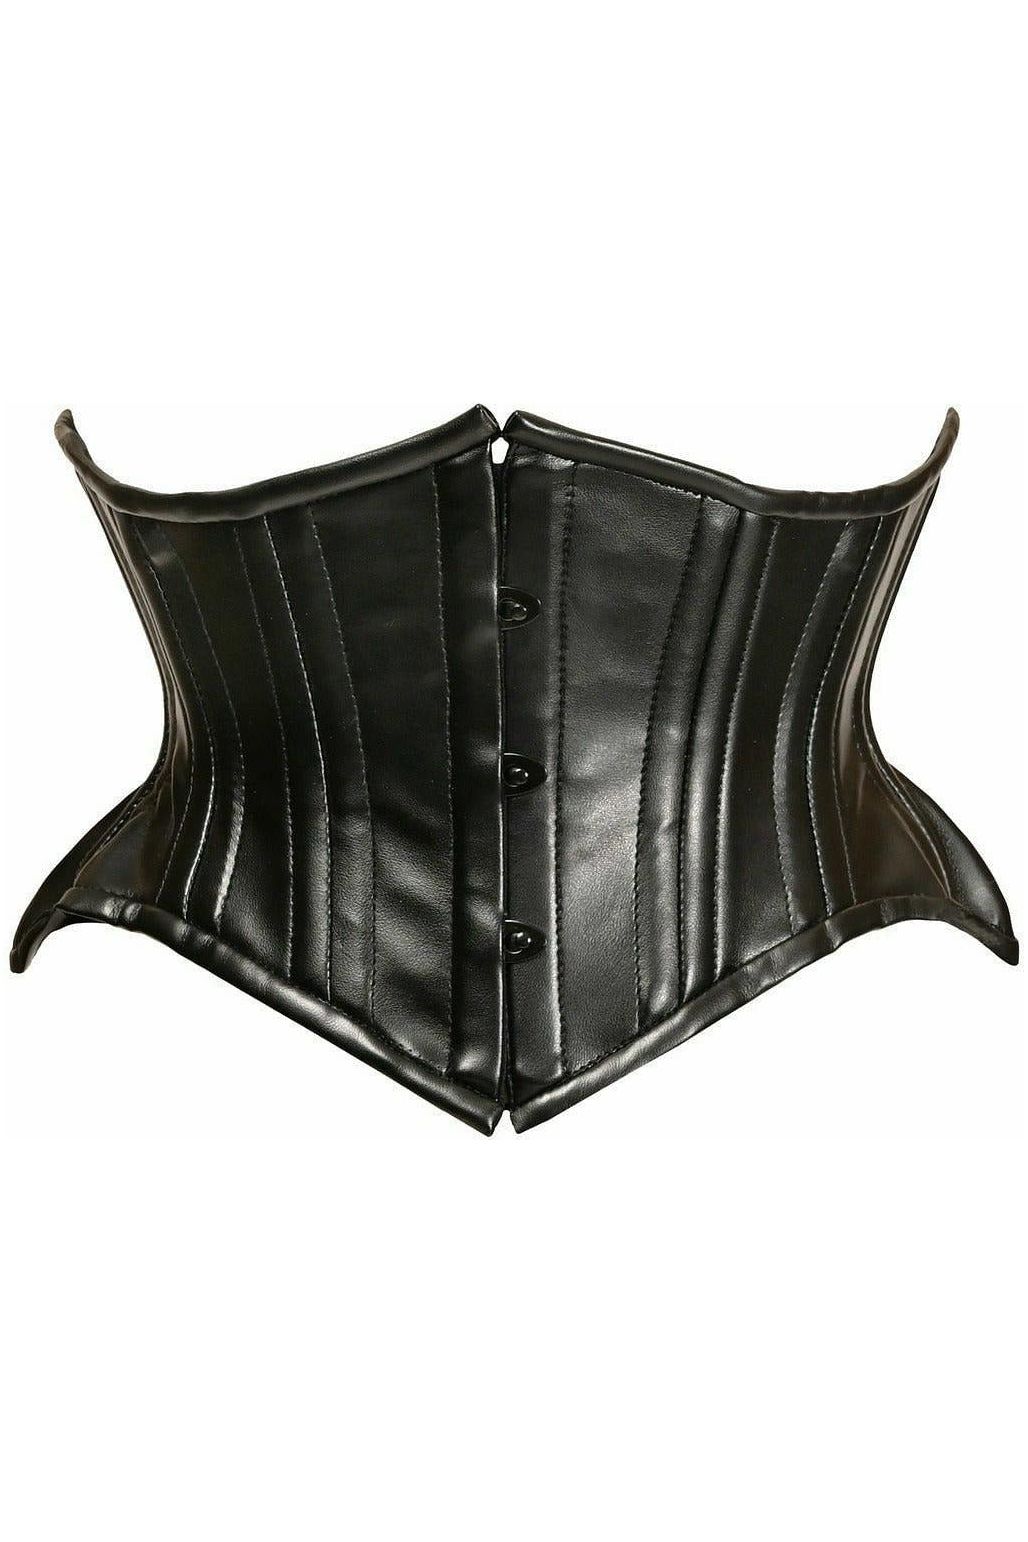 Top Drawer Black Faux Leather Double Steel Boned Curvy Cut Waist Cincher - Daisy Corsets